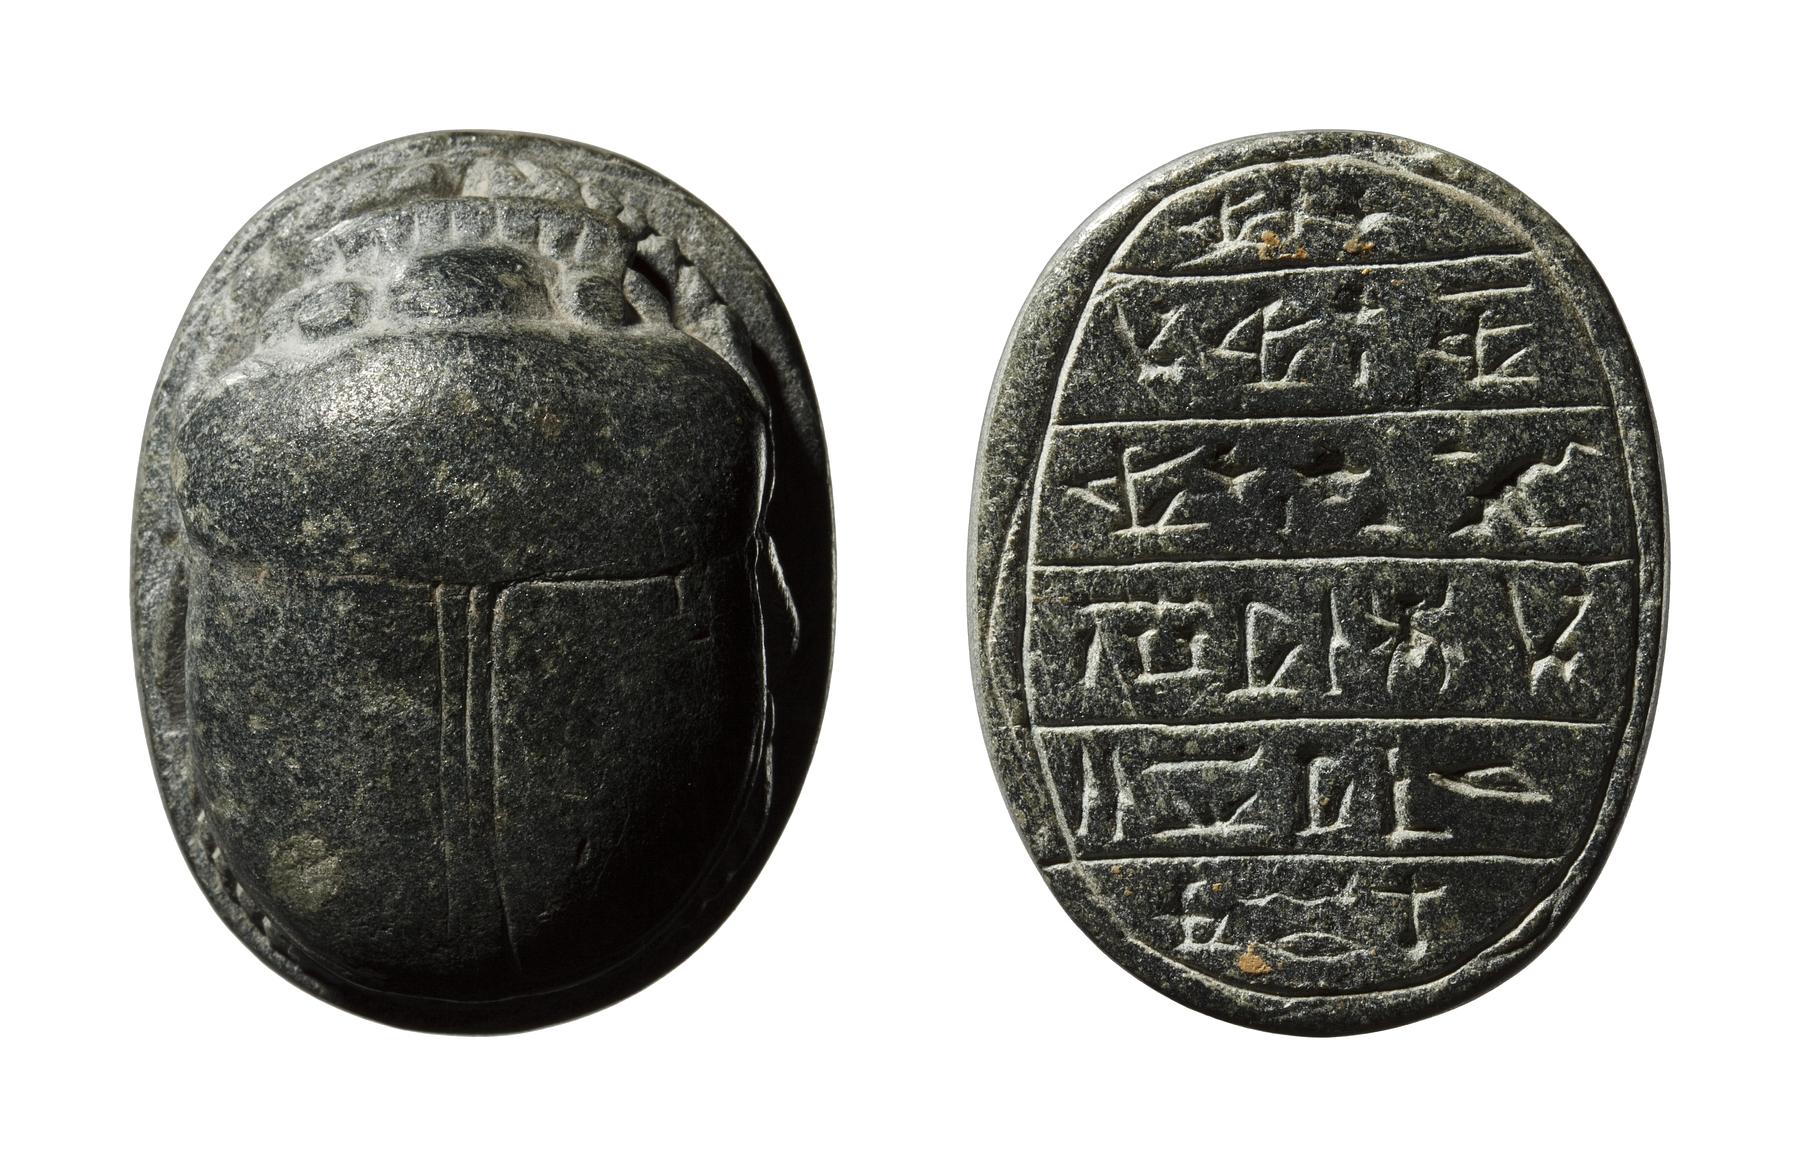 Scarab with hieroglyphic inscription, H409